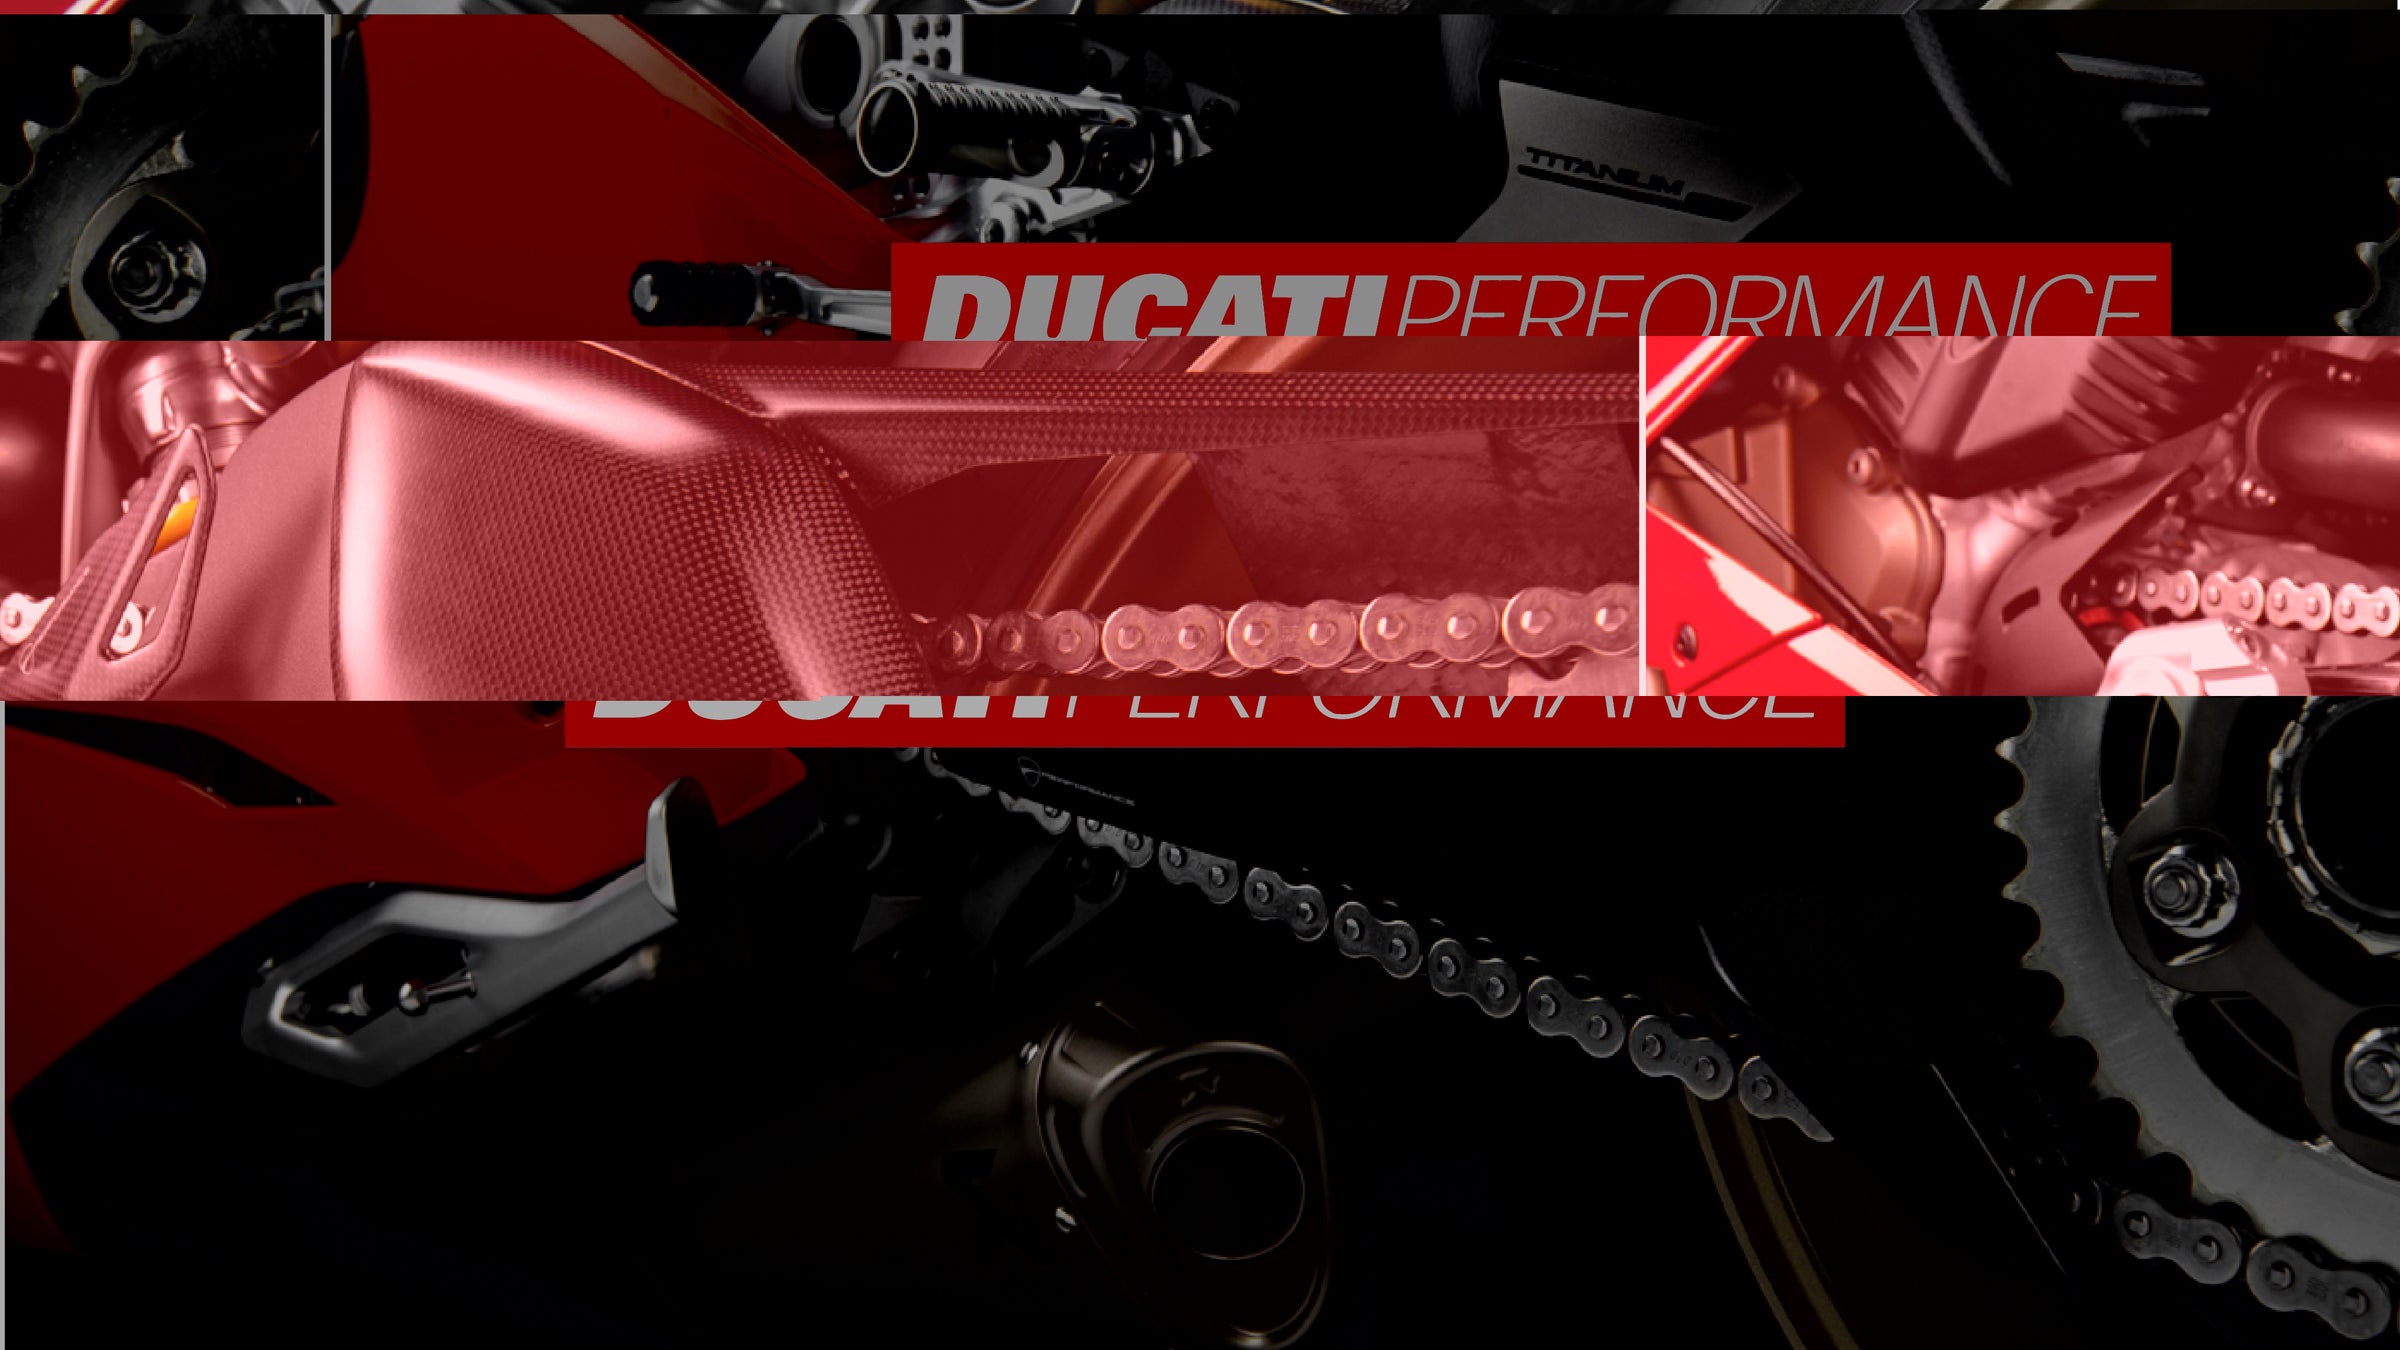 Ducati Performance Parts